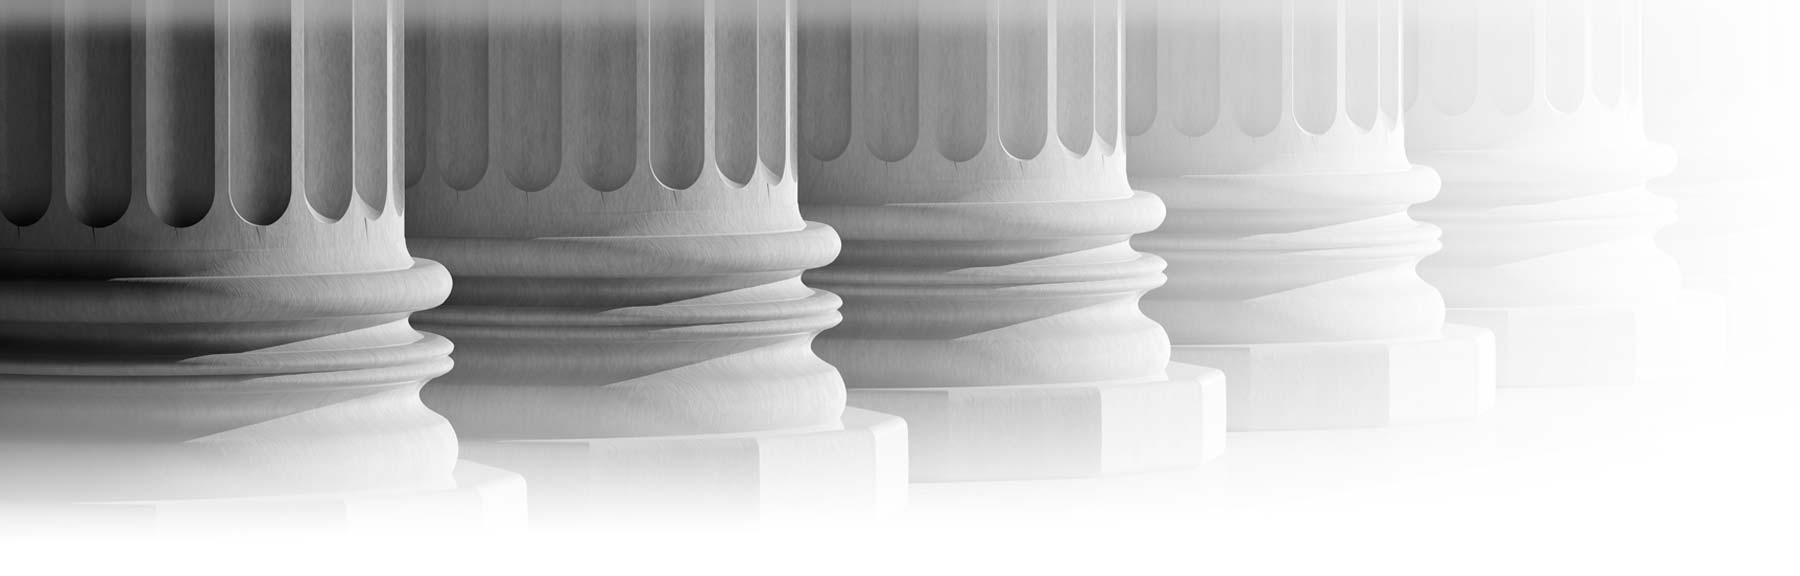 Pillars Image